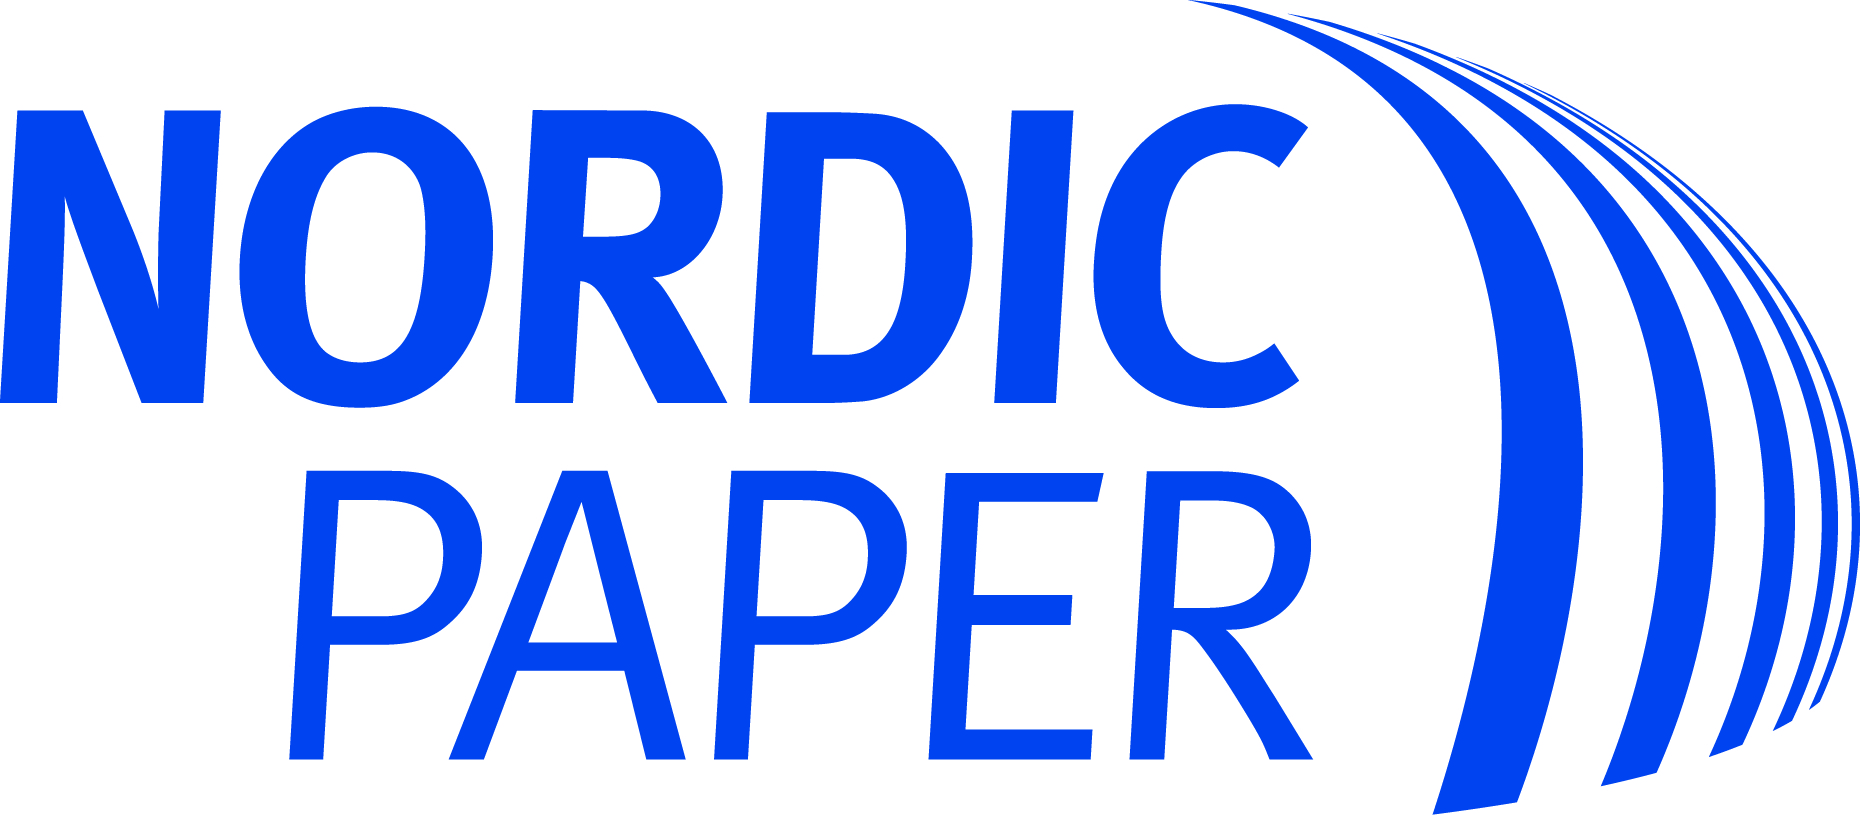 Nordic Paper